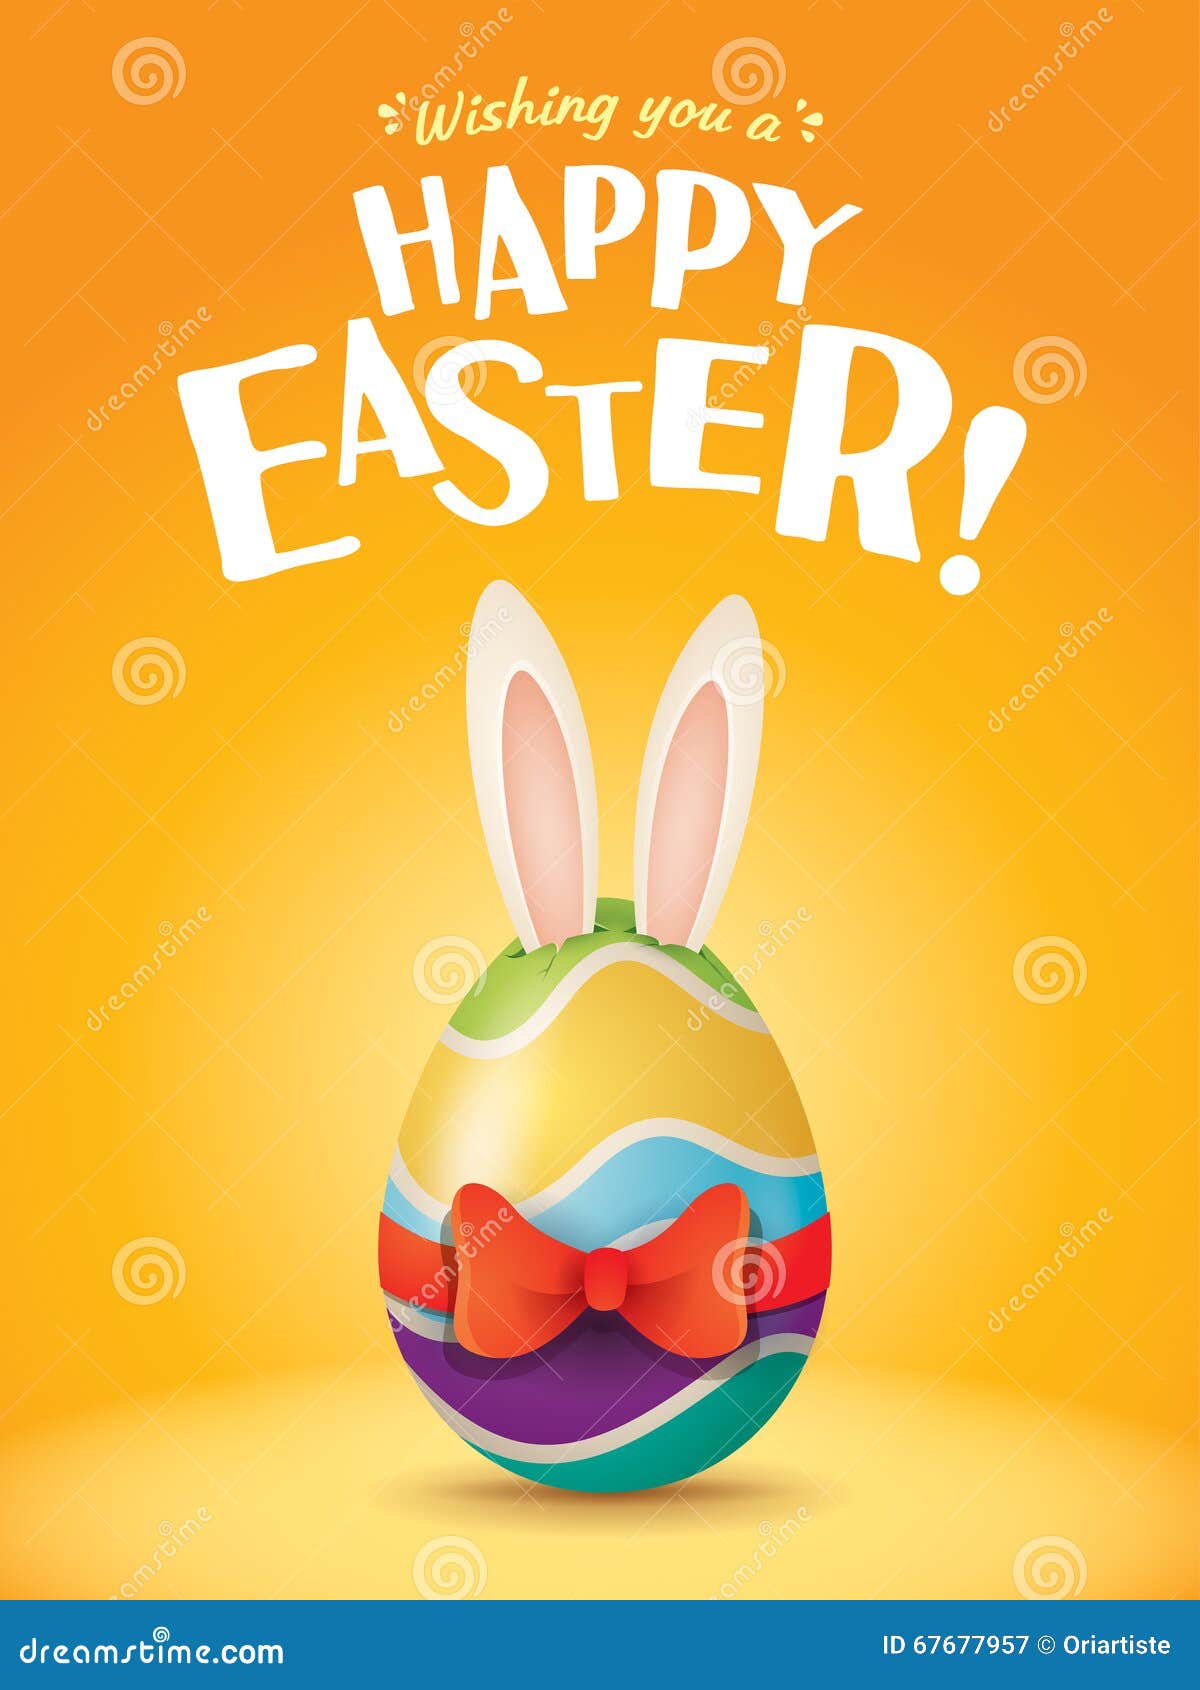 Happy Easter! stock vector. Illustration of inside, ribbon - 67677957